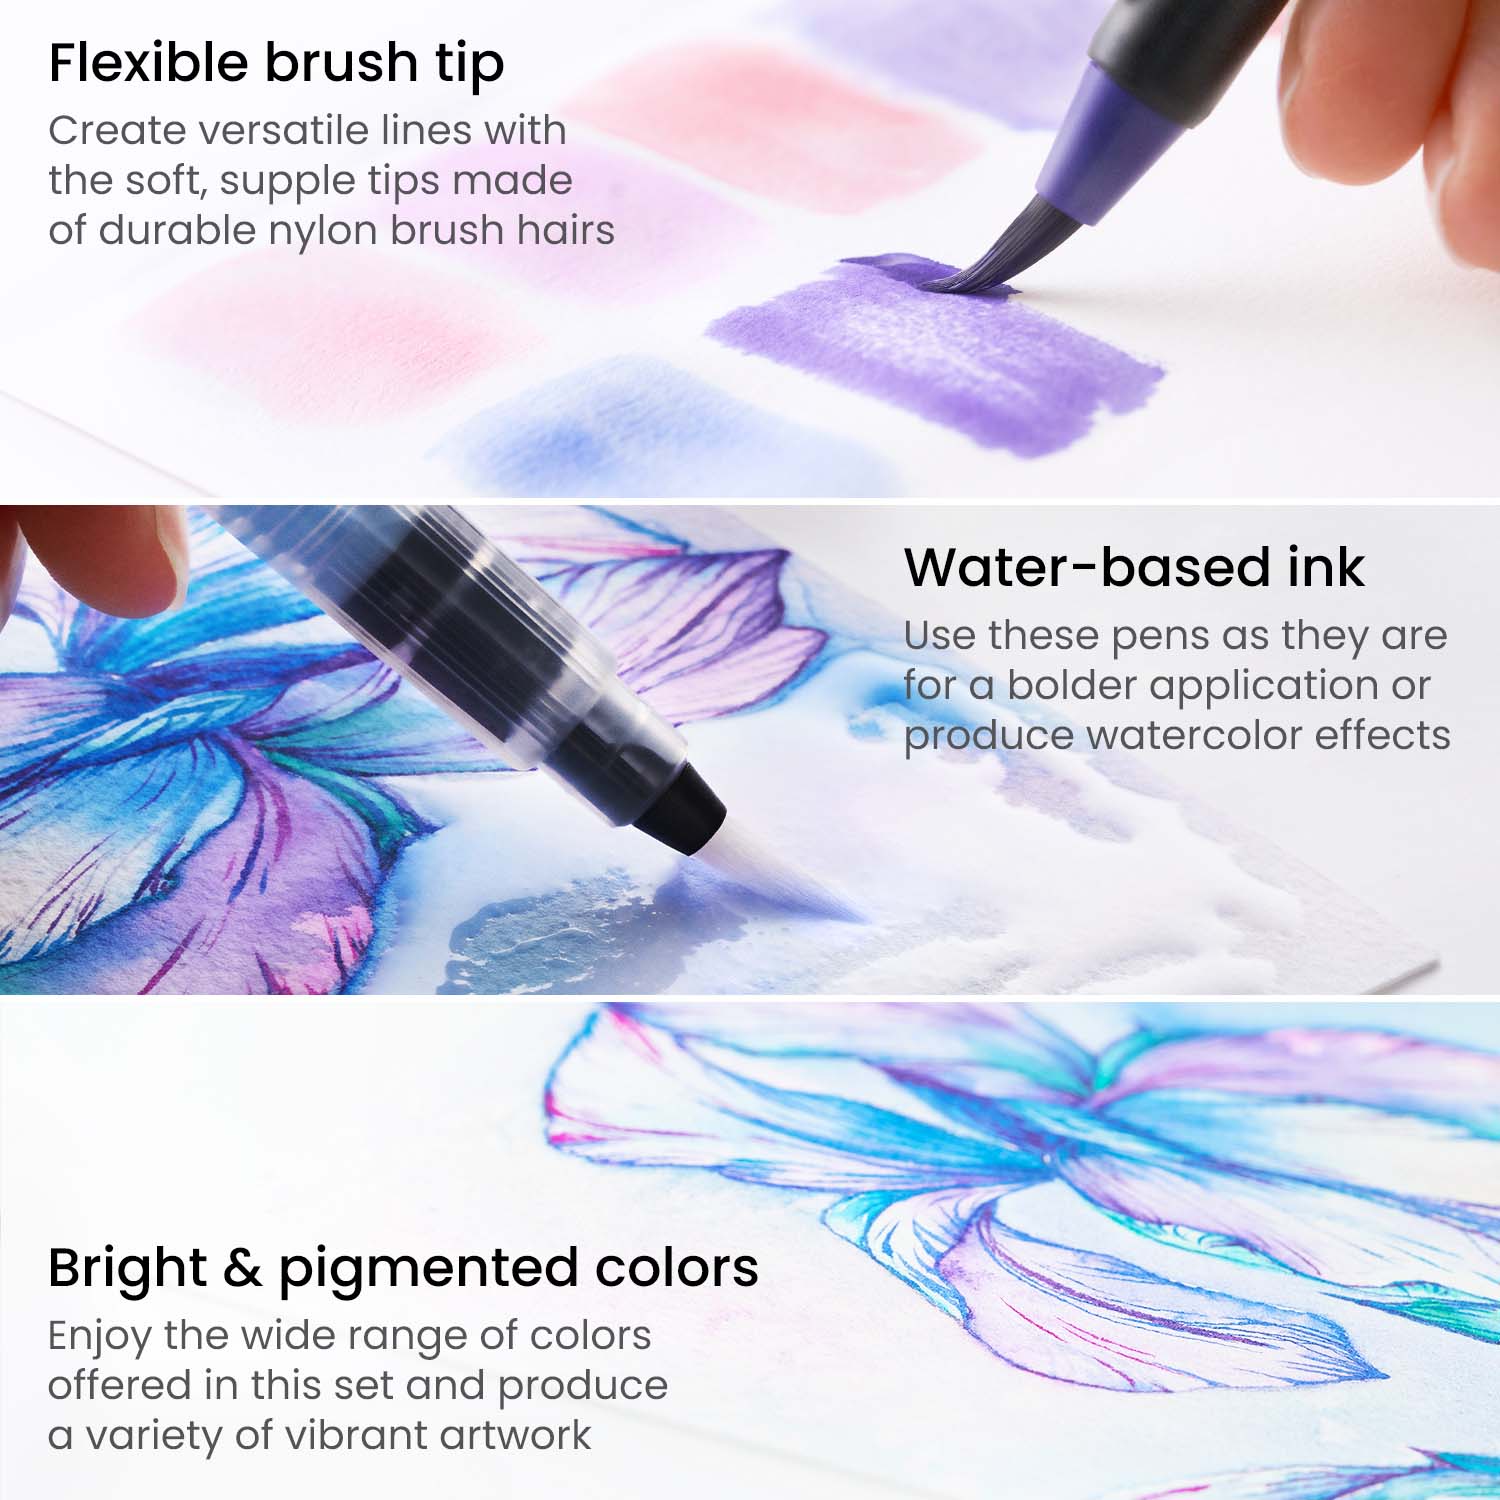 Set of 12 Arteza Real Brush Pens EN71 Muliti-Colors New No Packaging (d)